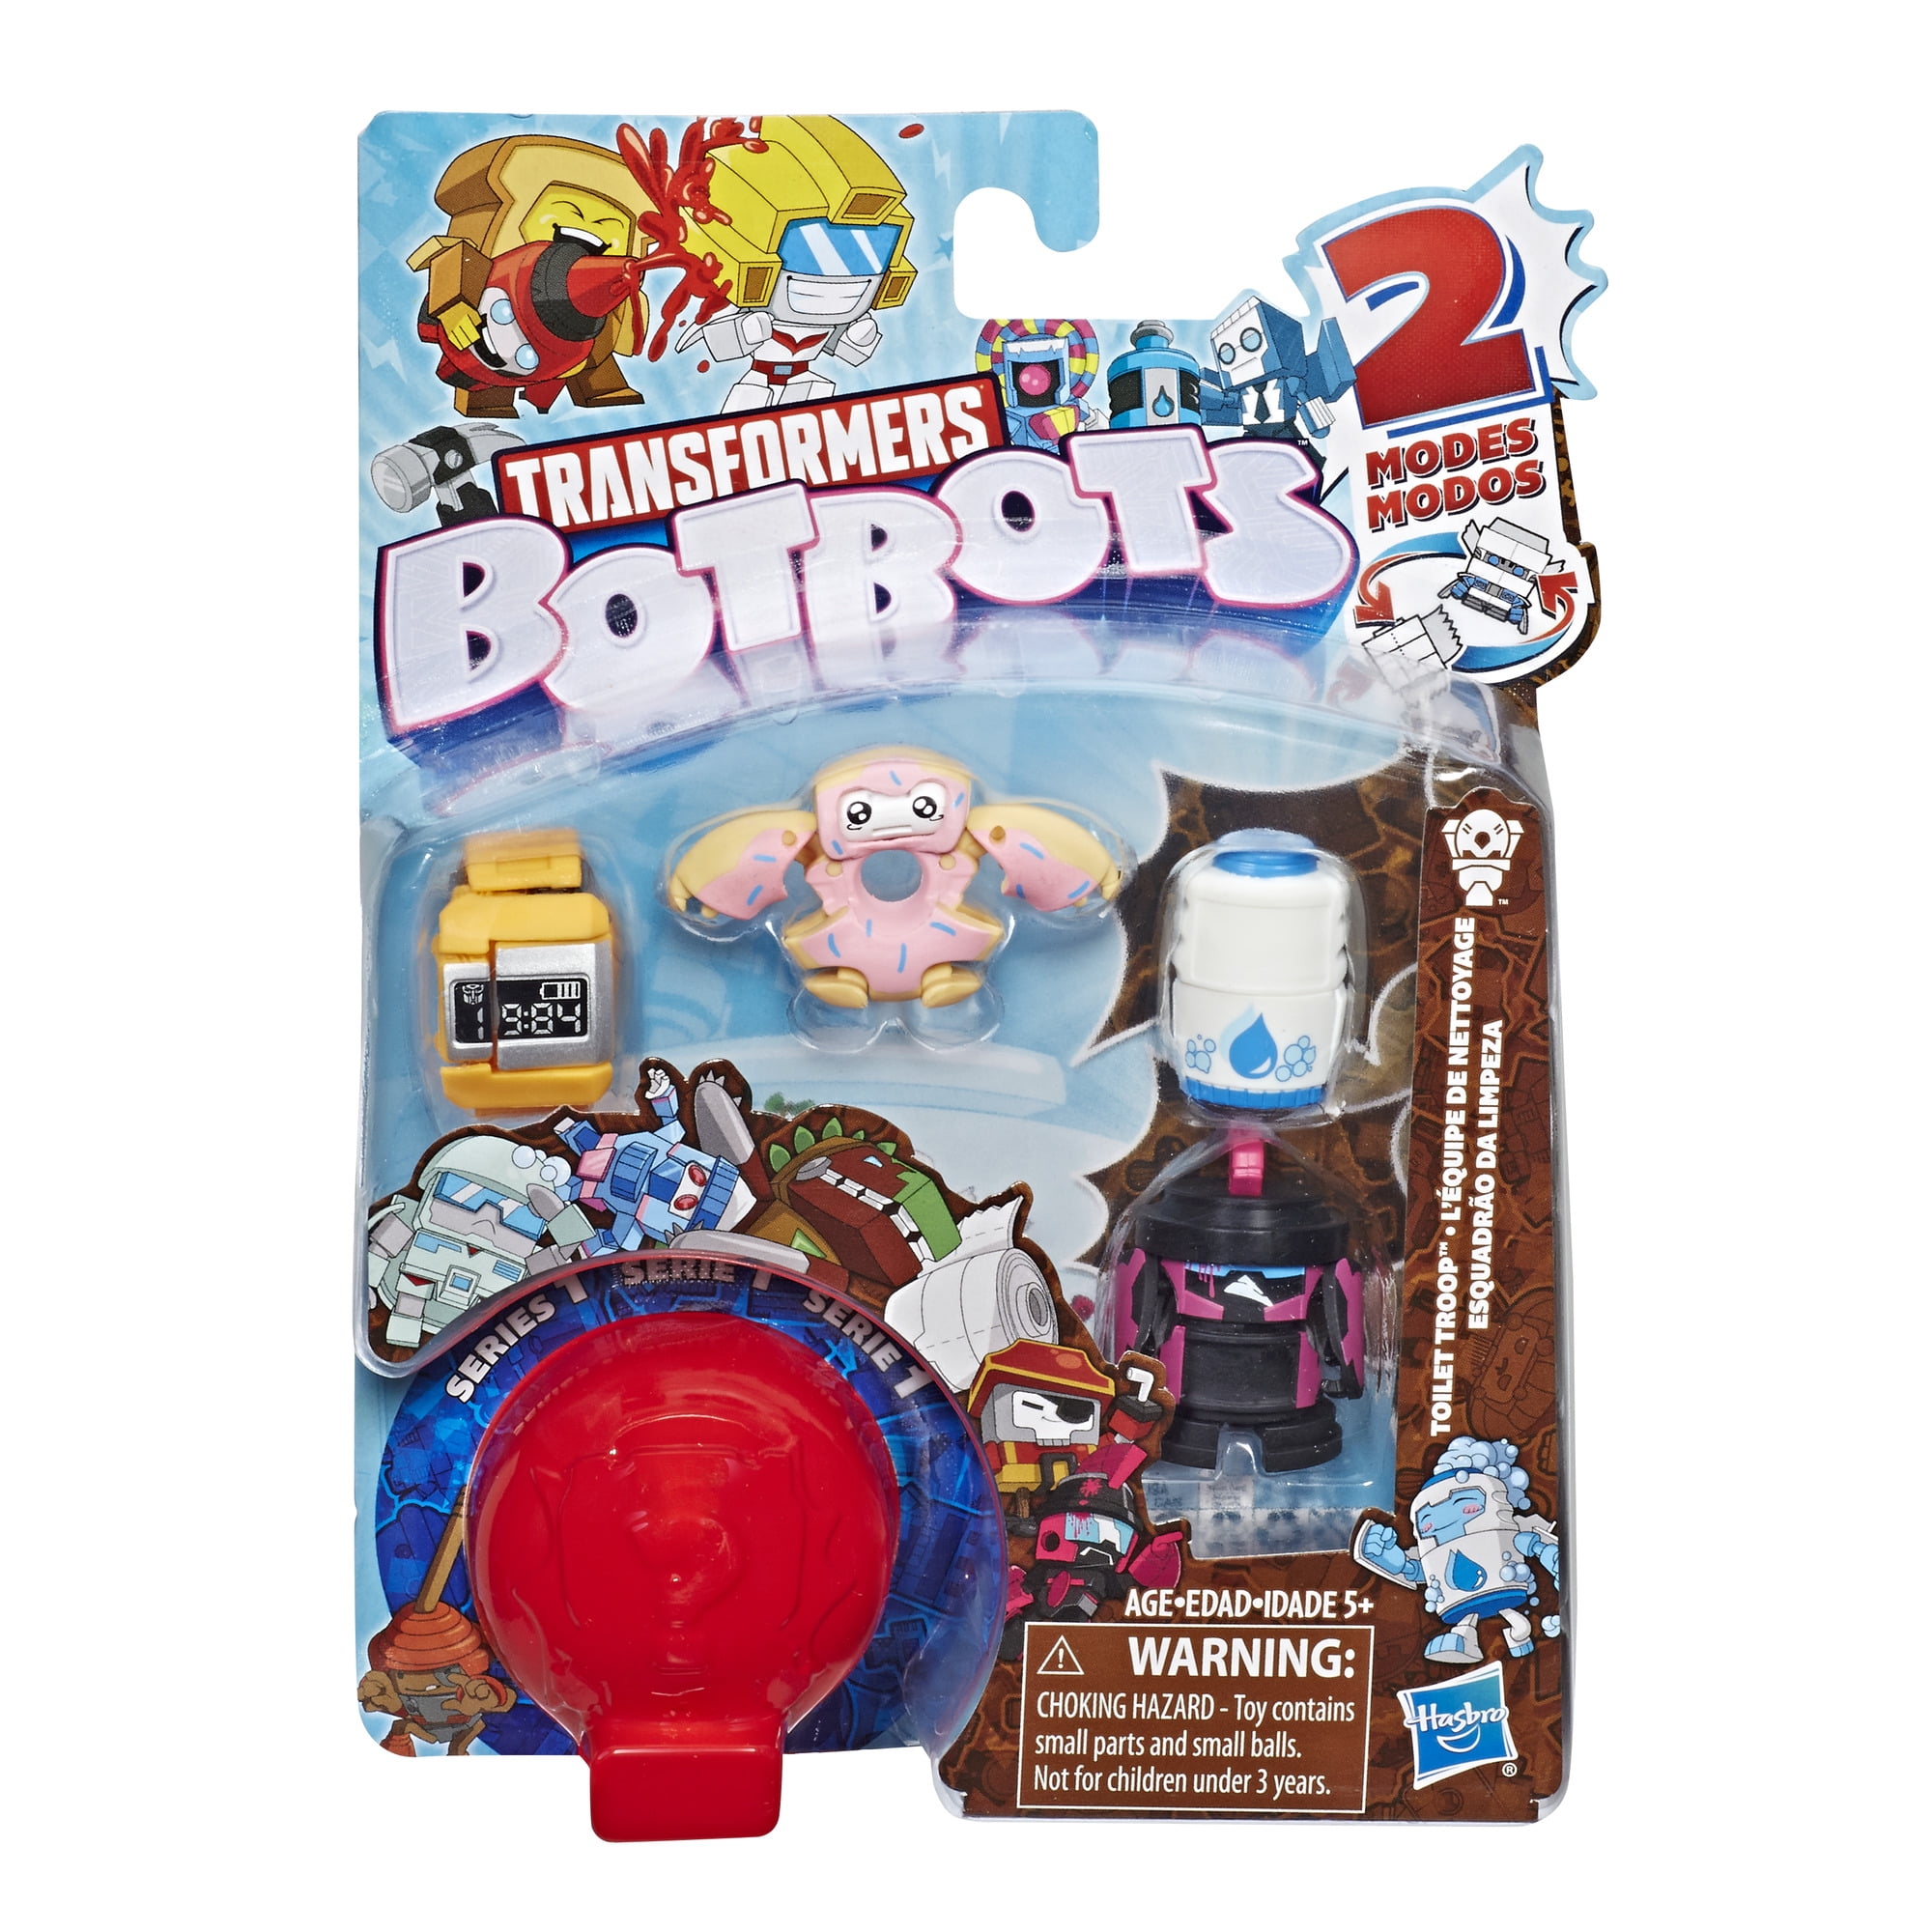 Transformers BotBots Toys Series 1 